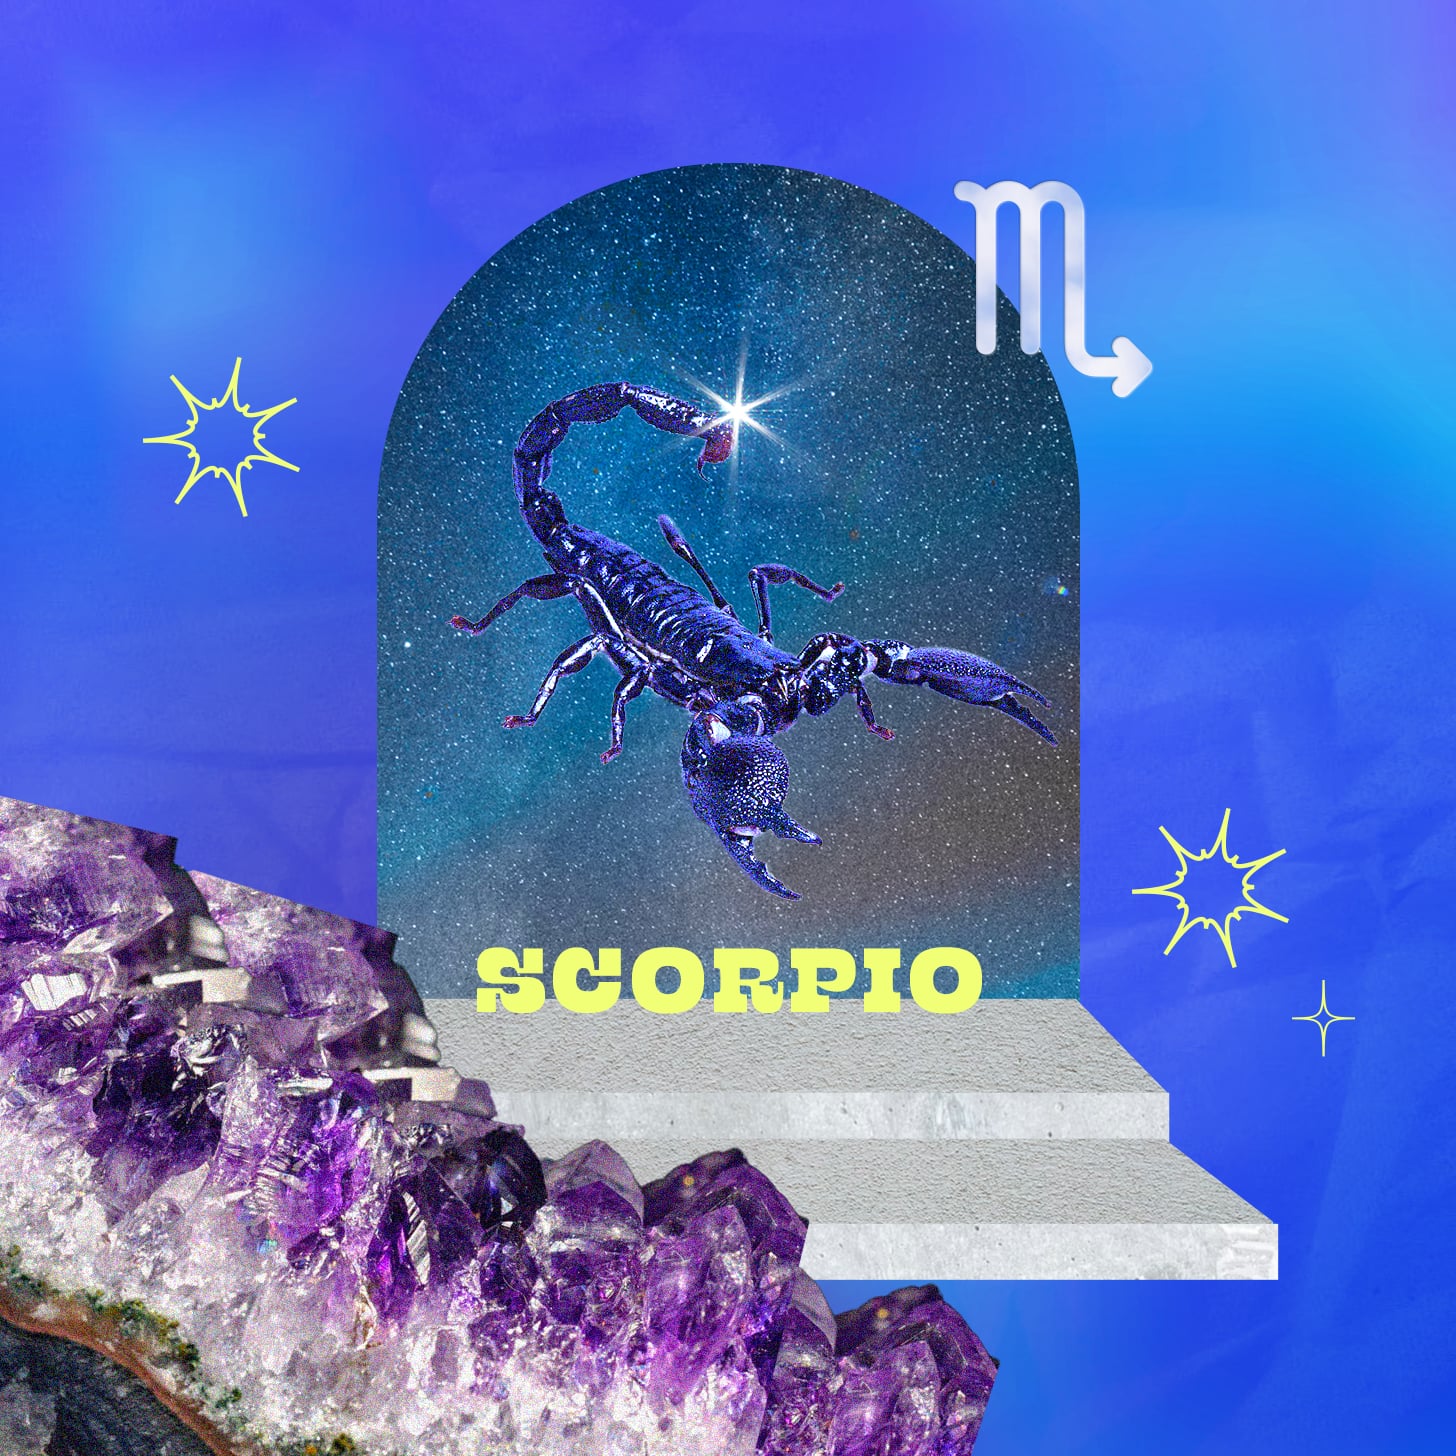 Scorpio weekly horoscope for September 11, 2022